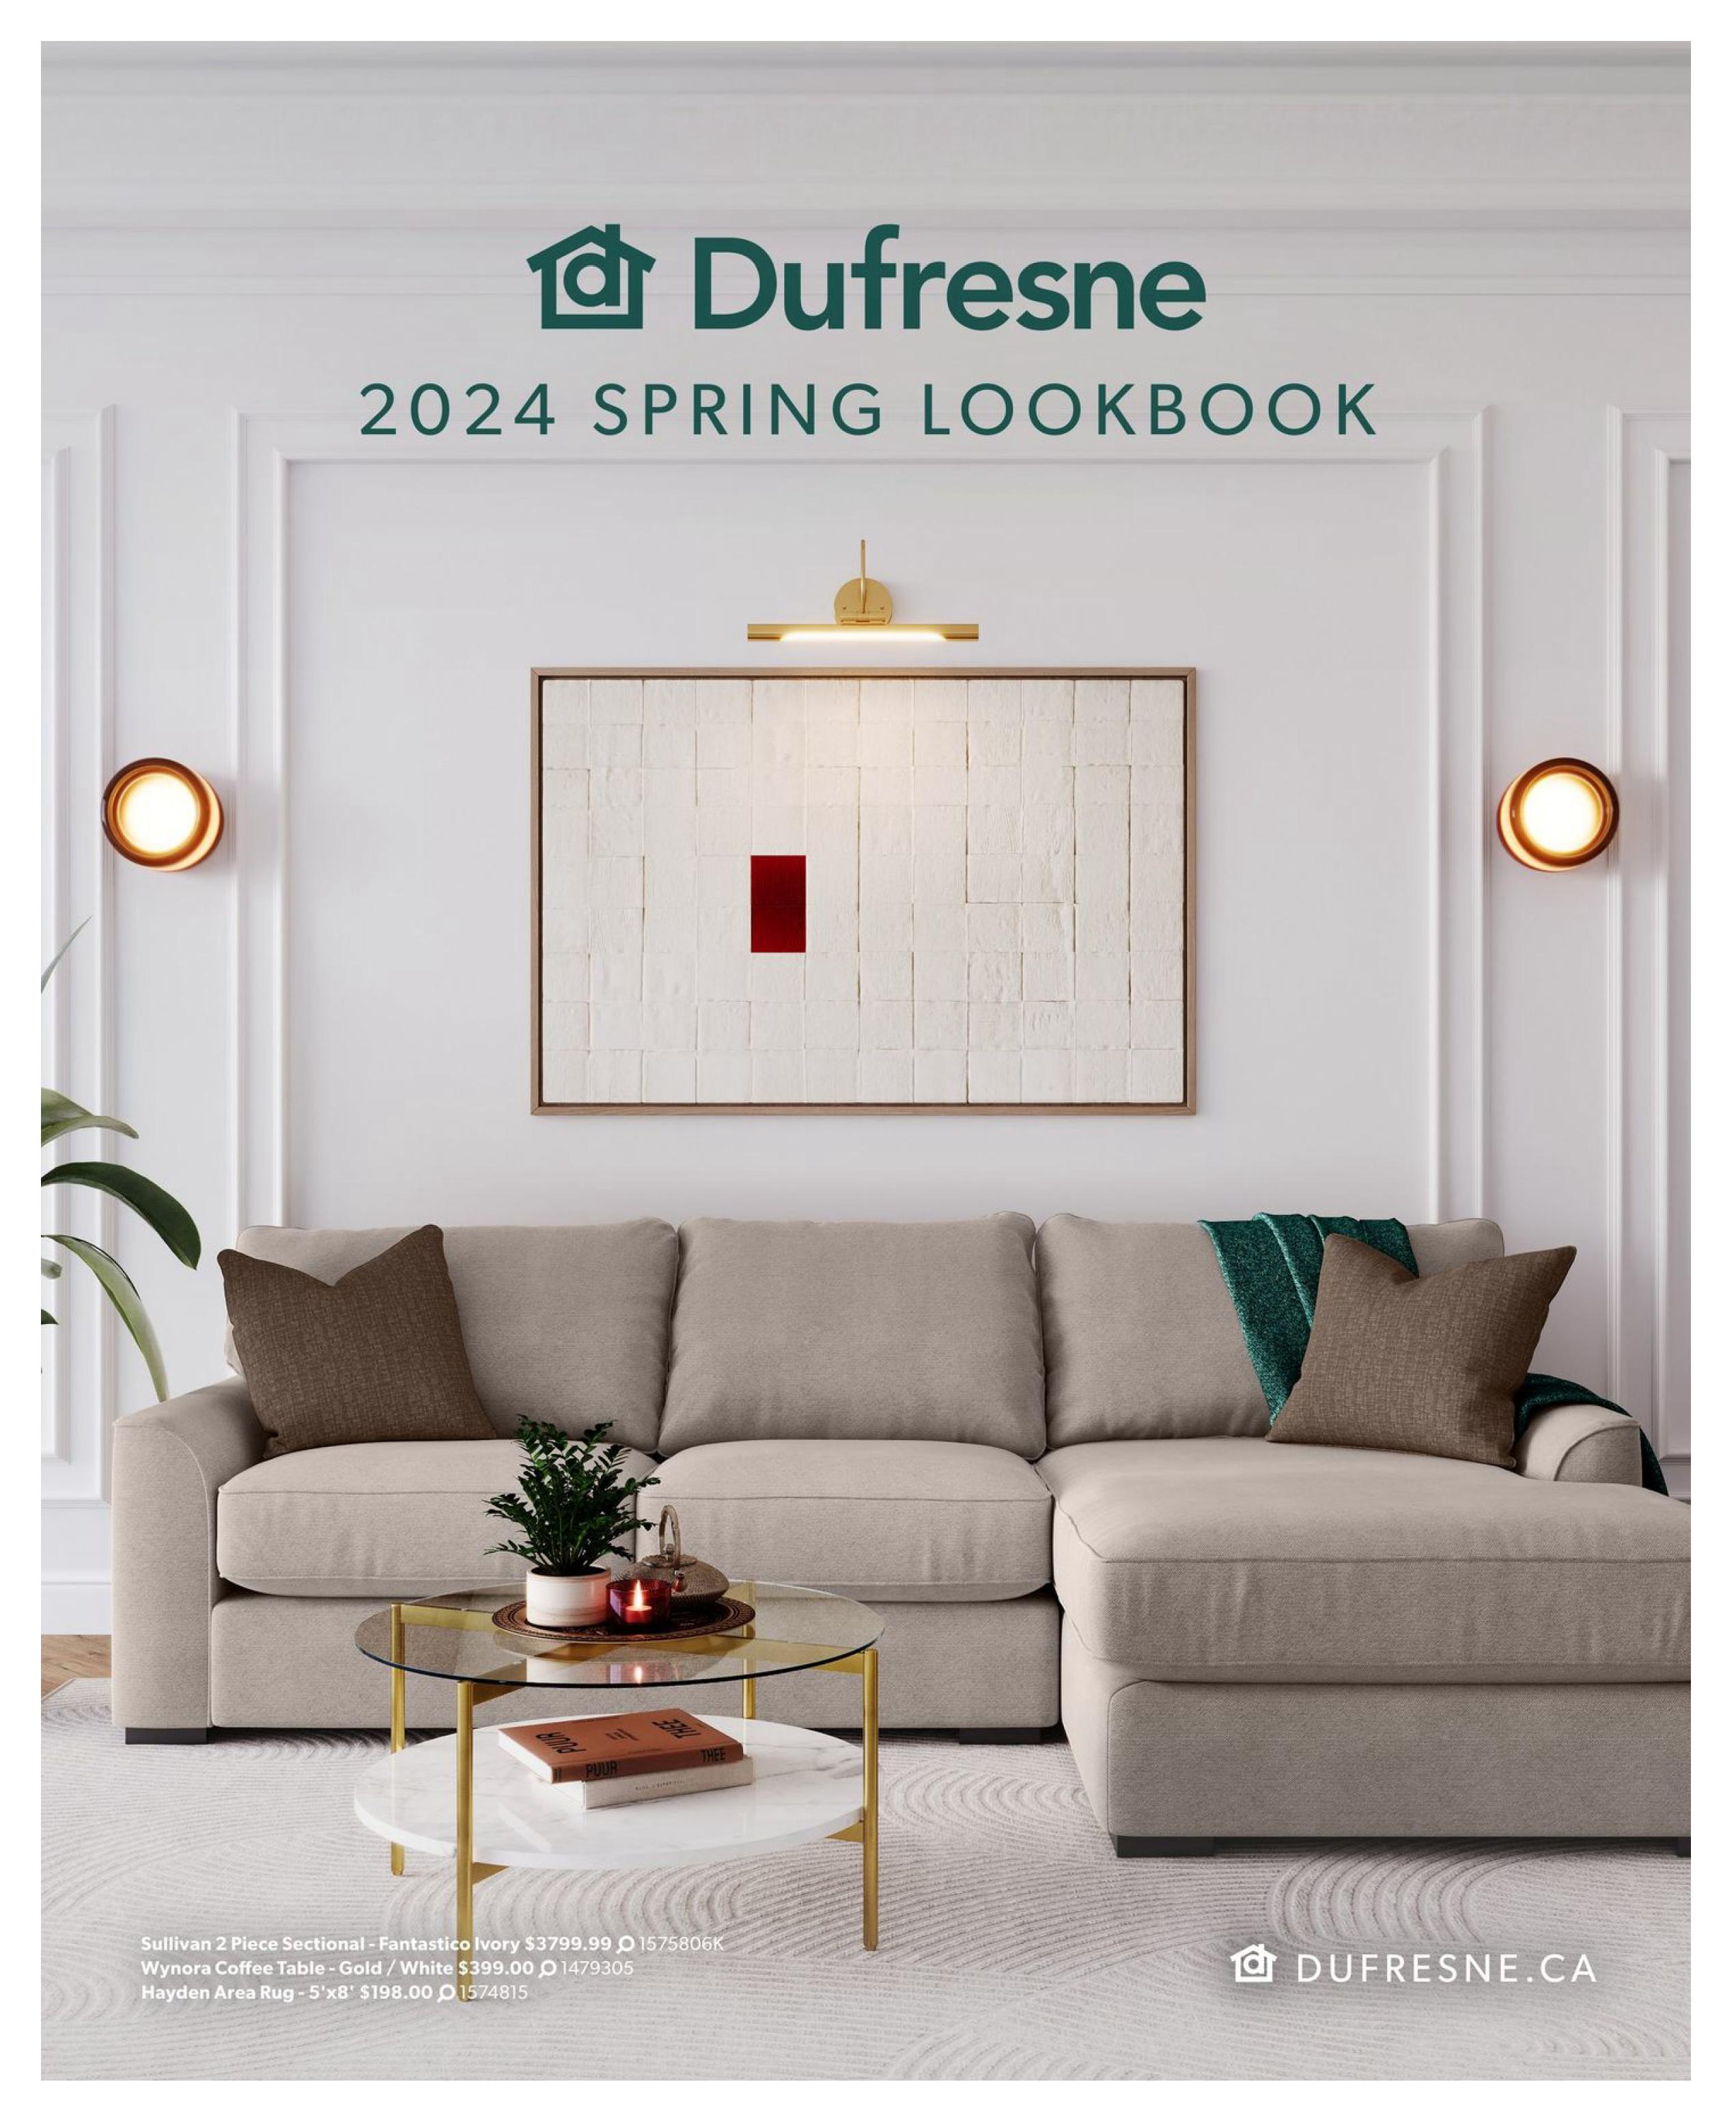 Dufresne Furniture - 2024 Spring Lookbook